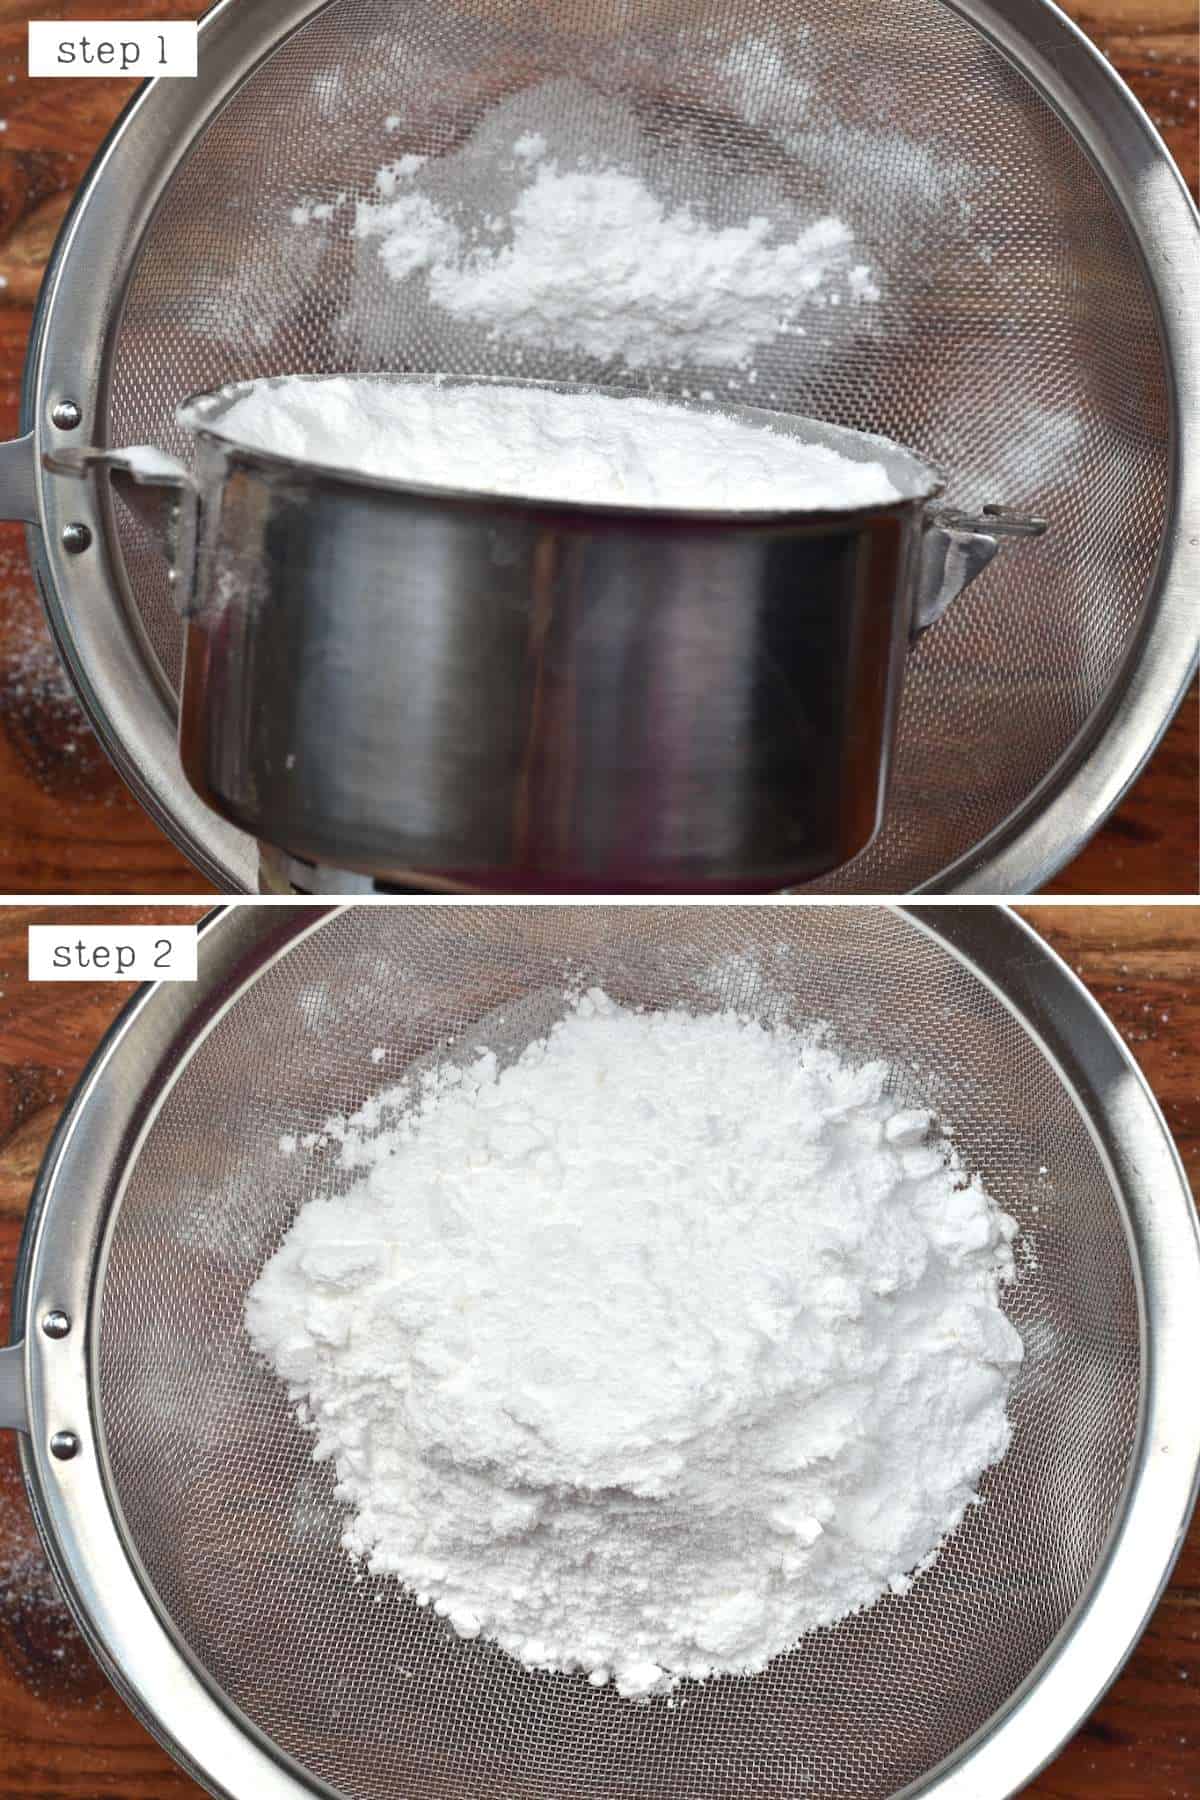 Steps for sieving powdered sugar